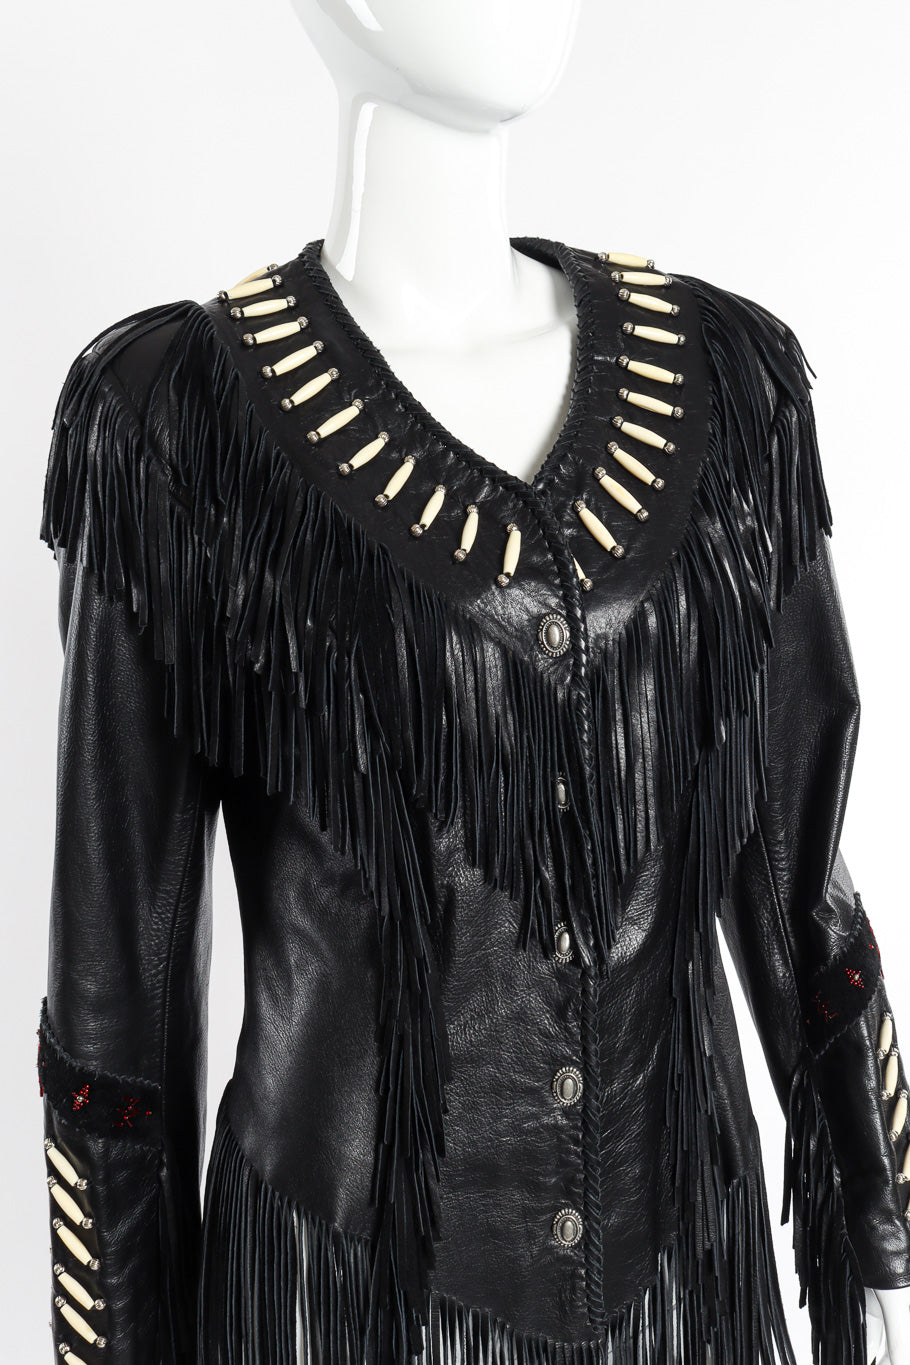 Vintage Arturo Beaded Leather Fringe Jacket front view on mannequin closeup @recessla